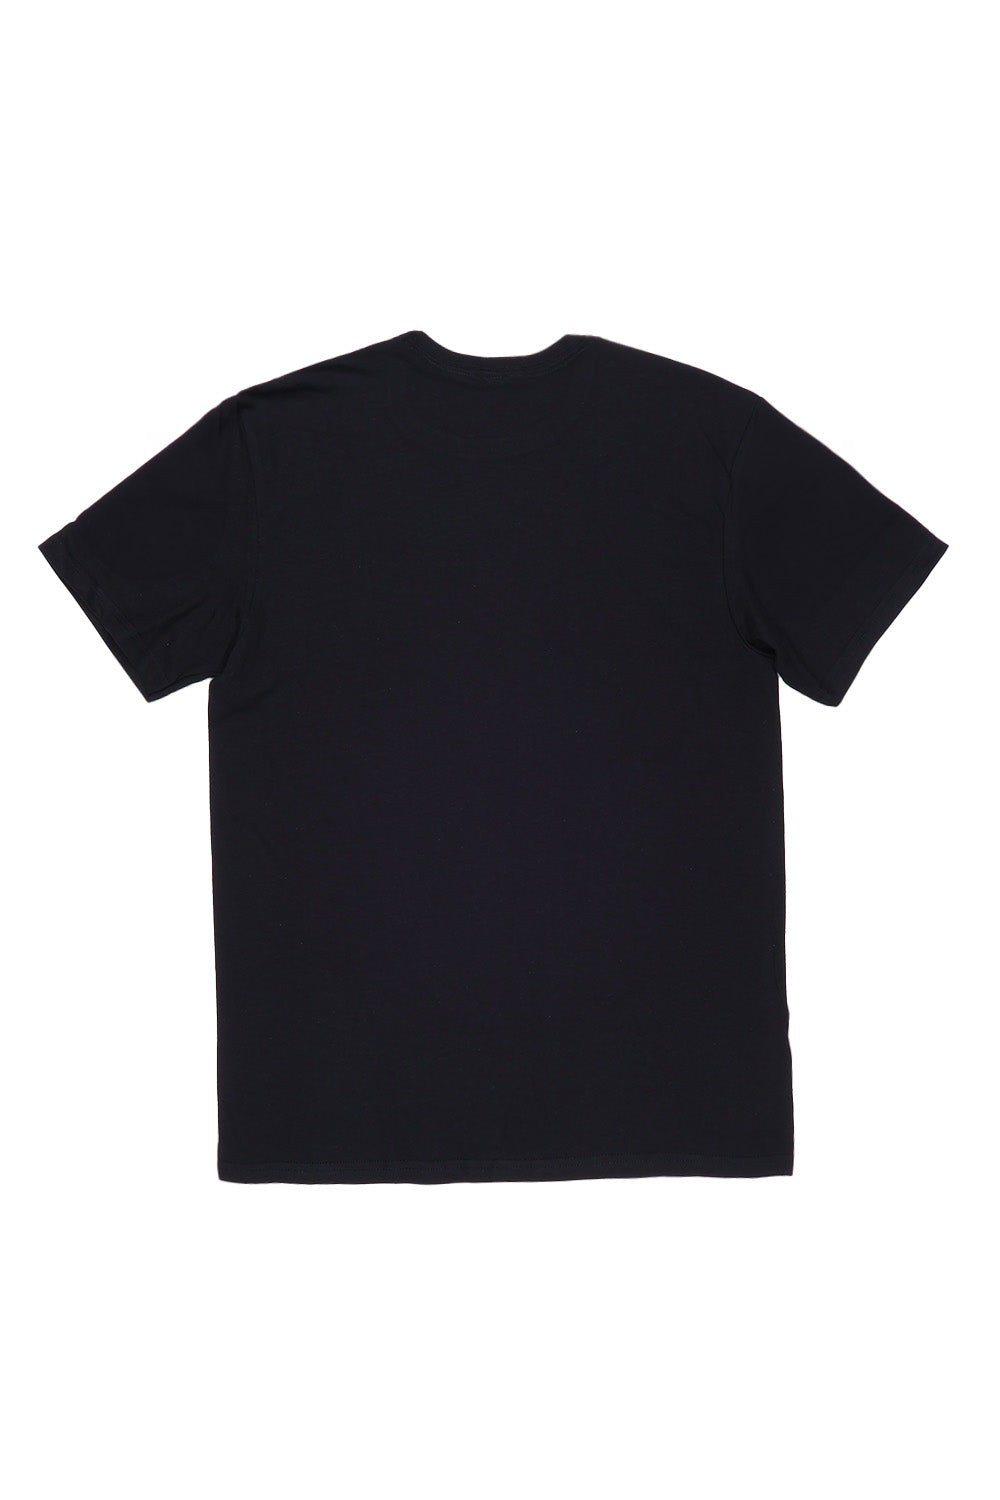 Long Live Cowboy T-Shirt in Black (Custom Packs)